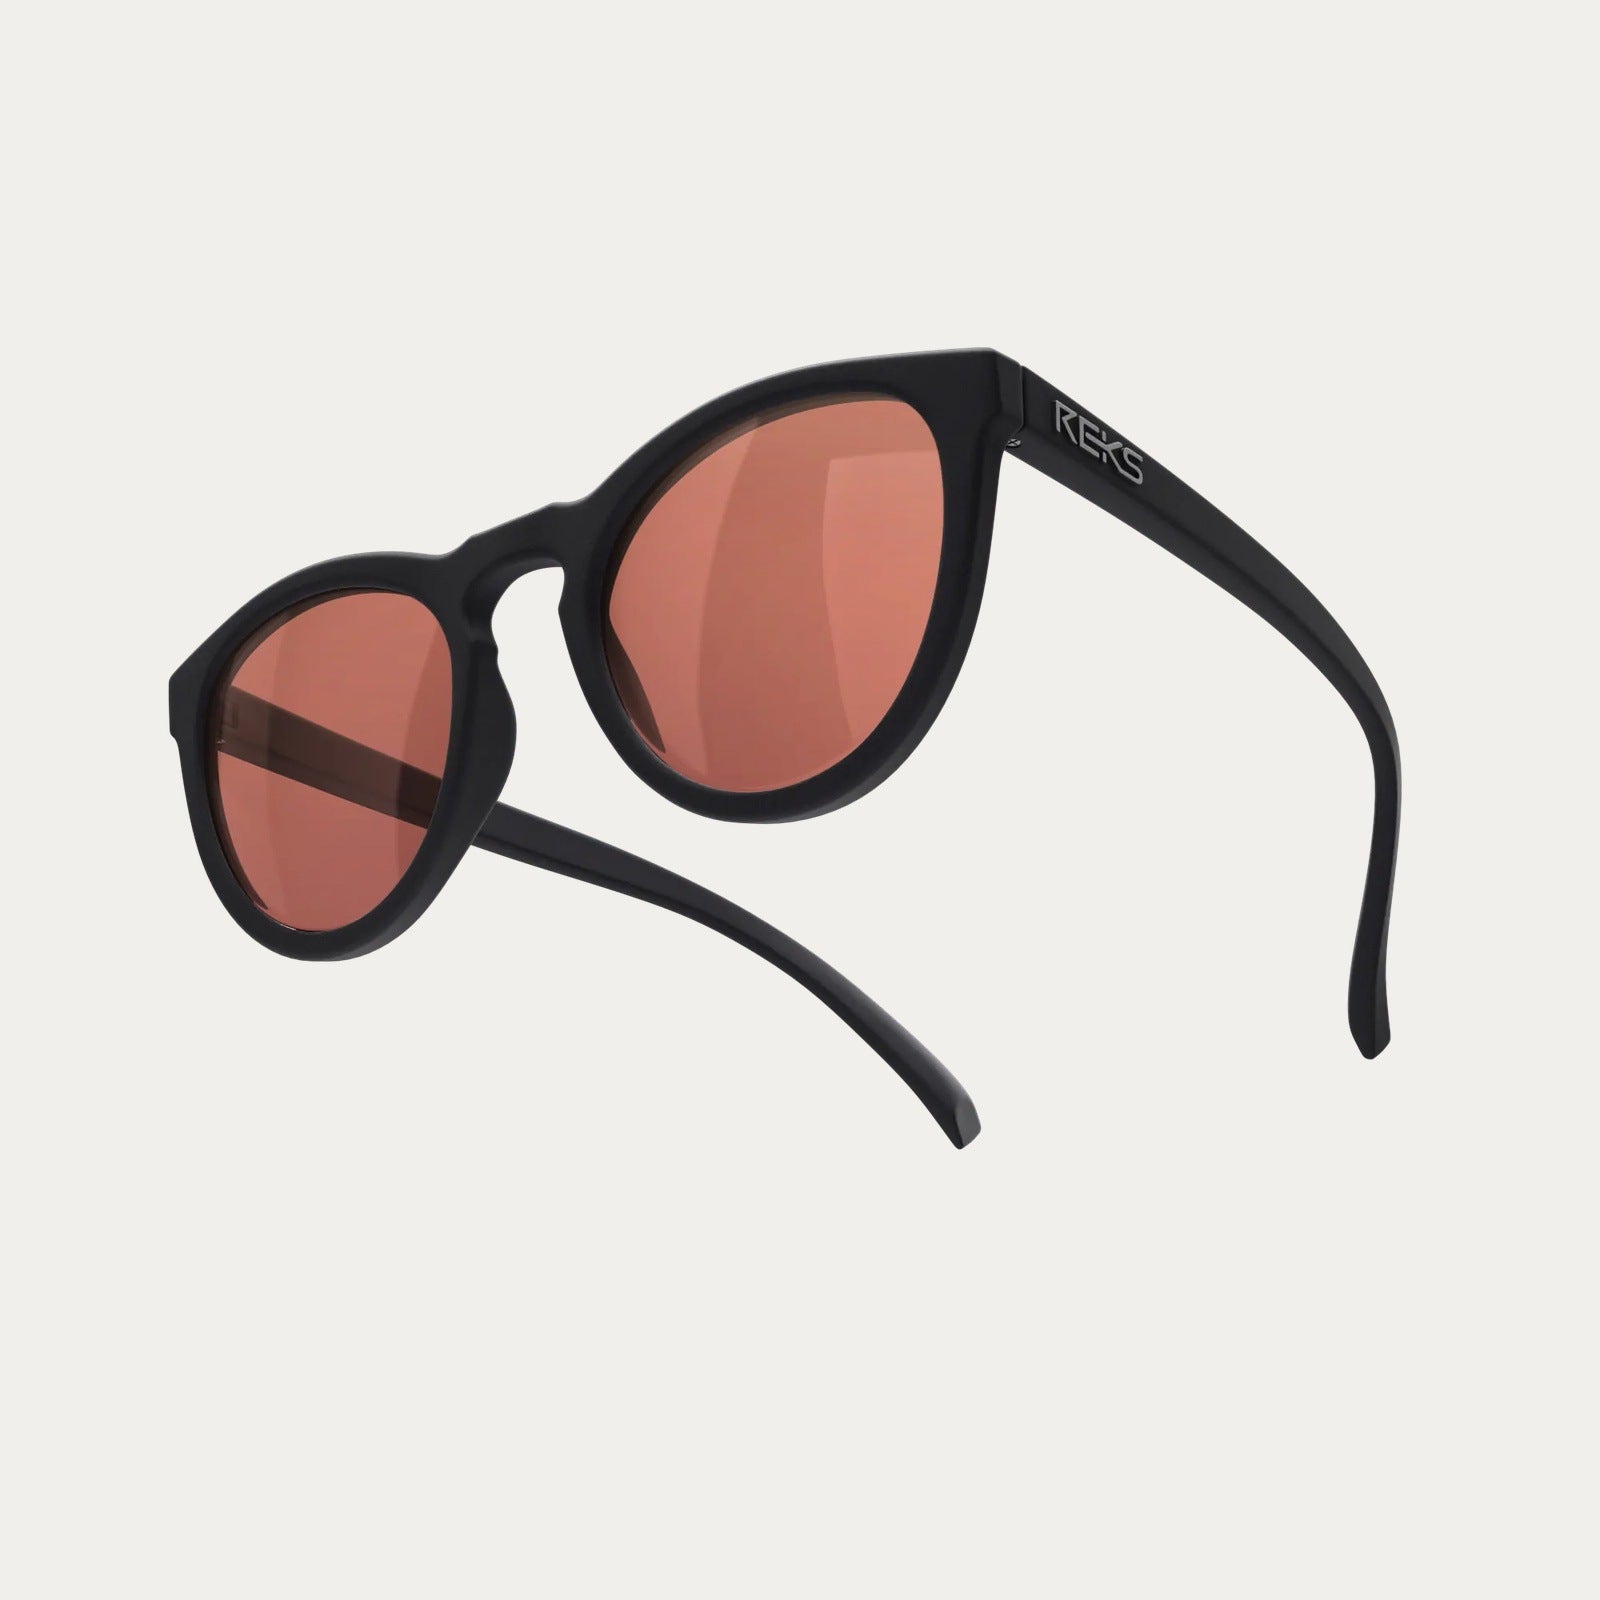 Reks | Round Polarized Polycarbonate Sunglasses Rose-Amber